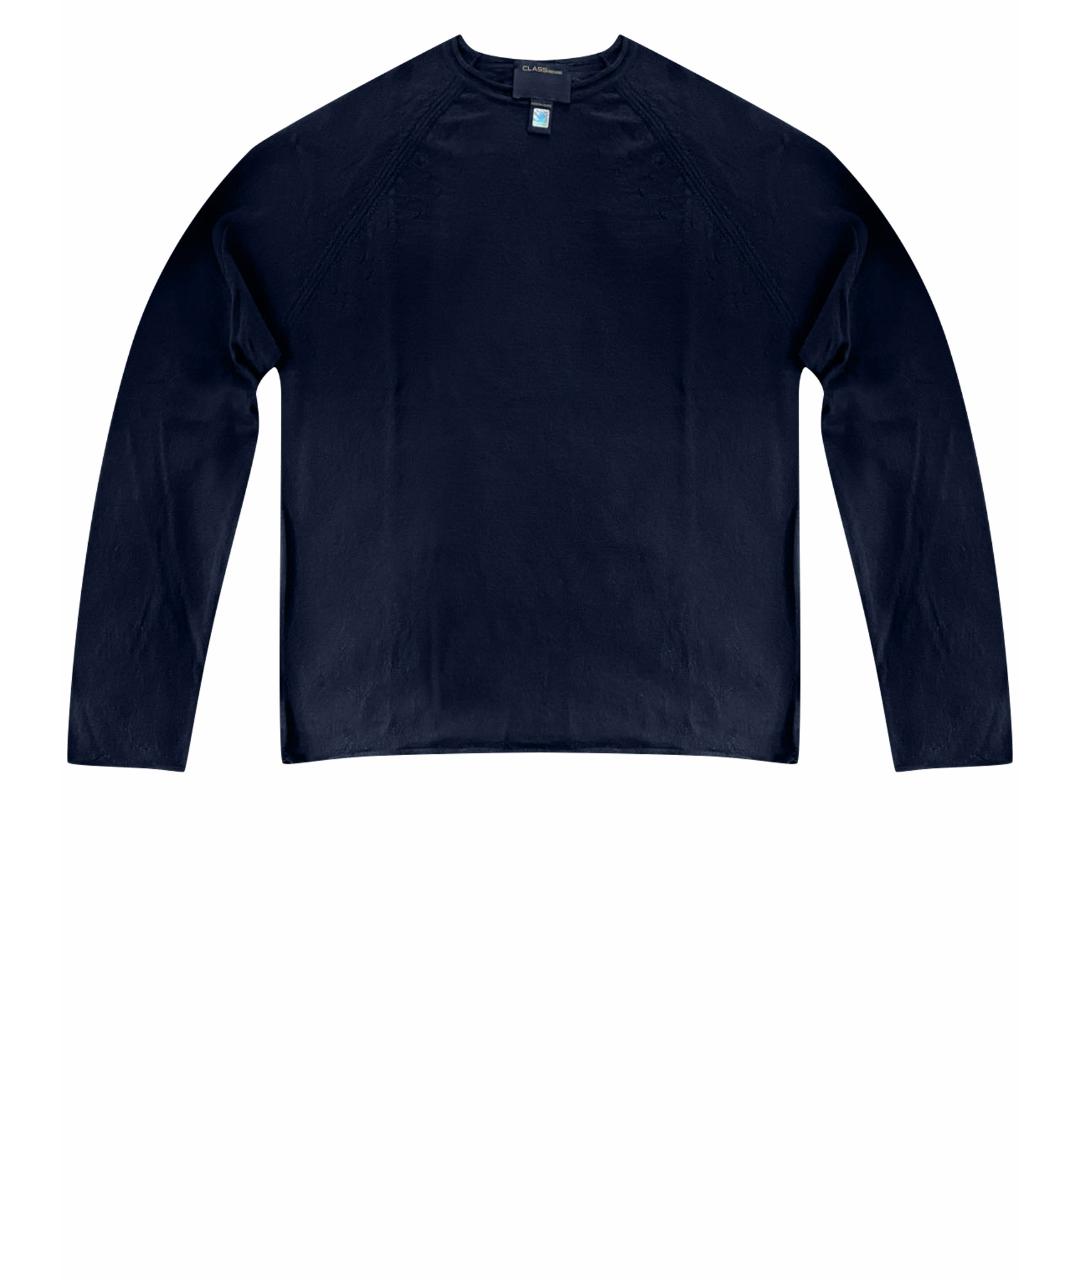 CAVALLI CLASS Темно-синий шерстяной джемпер / свитер, фото 1